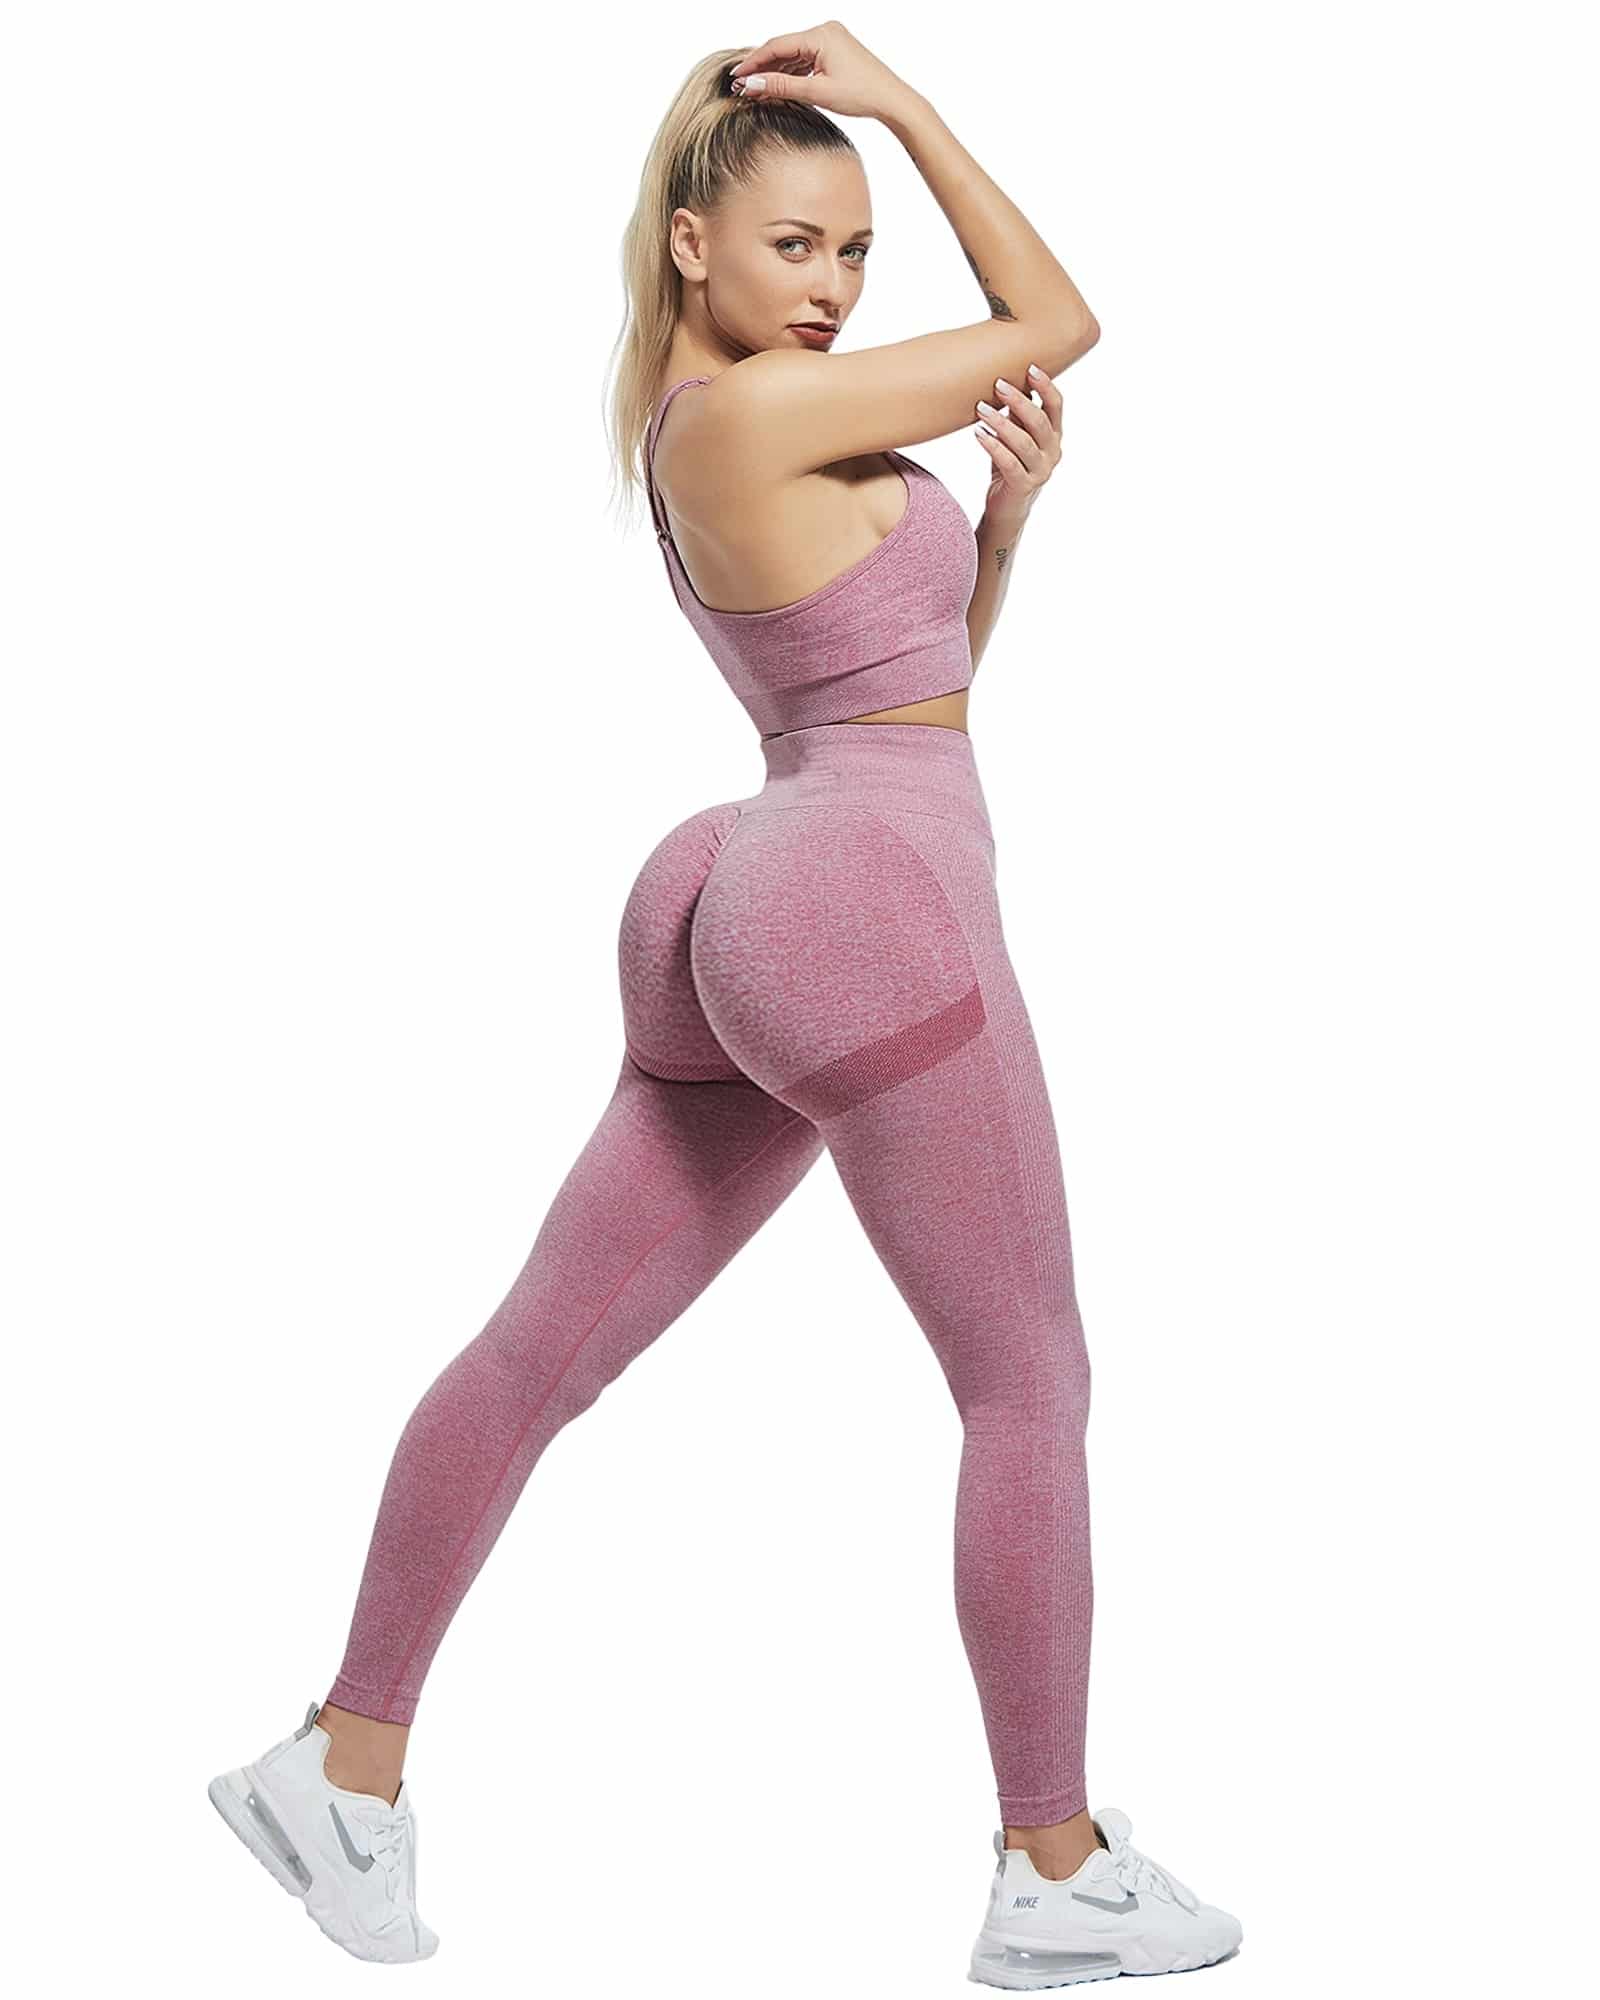 LZYVOO Sport Leggings Women Yoga Pants Tights Seamless Fitness Leggings Gym Clothing Push Up High Waist Workout Pants